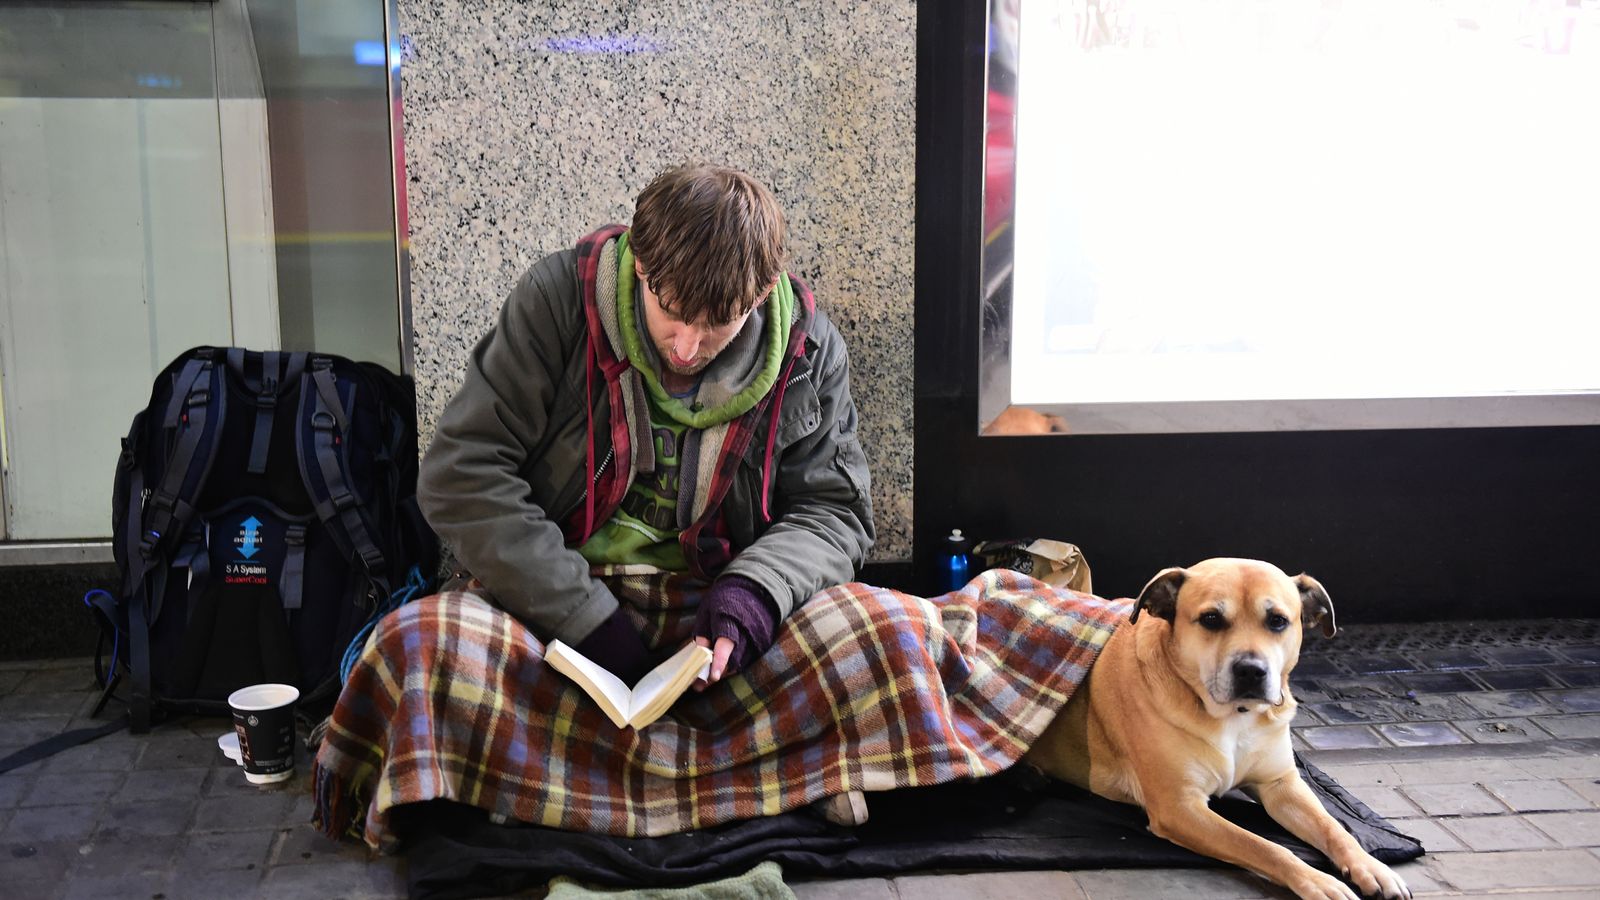 Thousands Of Hidden Homeless People Need Support | Uk News | Sky News